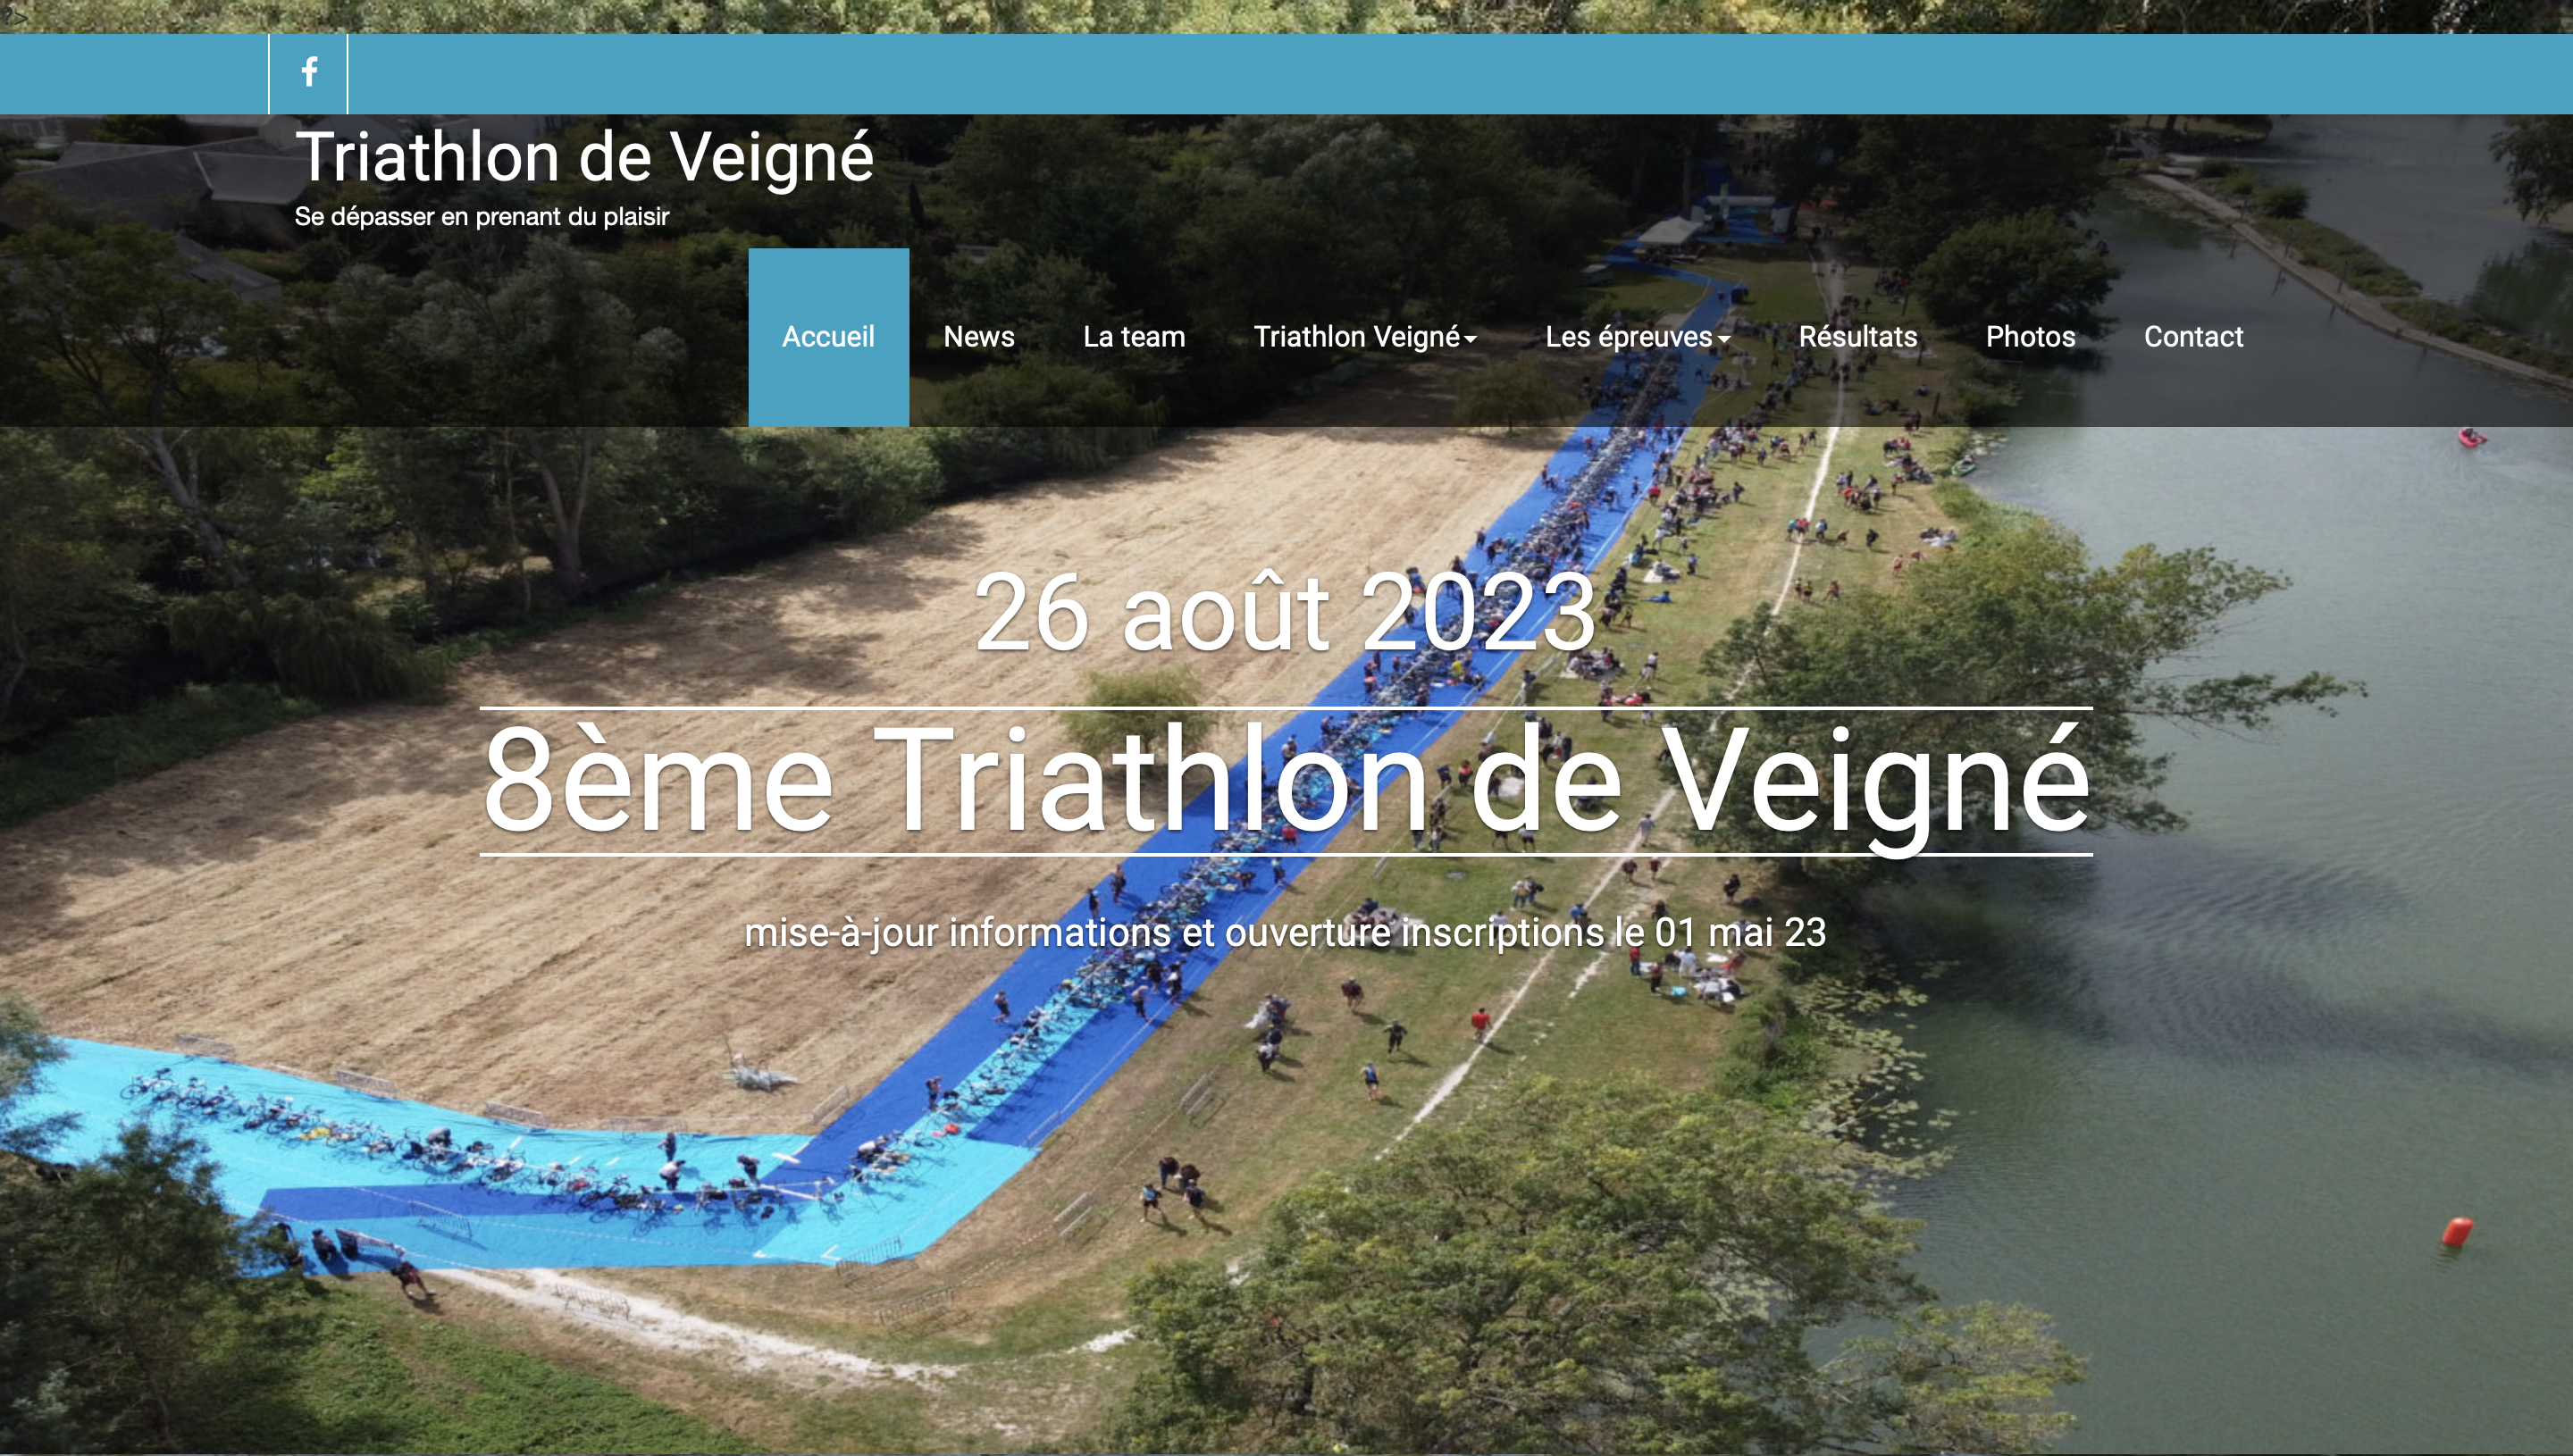 Triathlon de Veigne